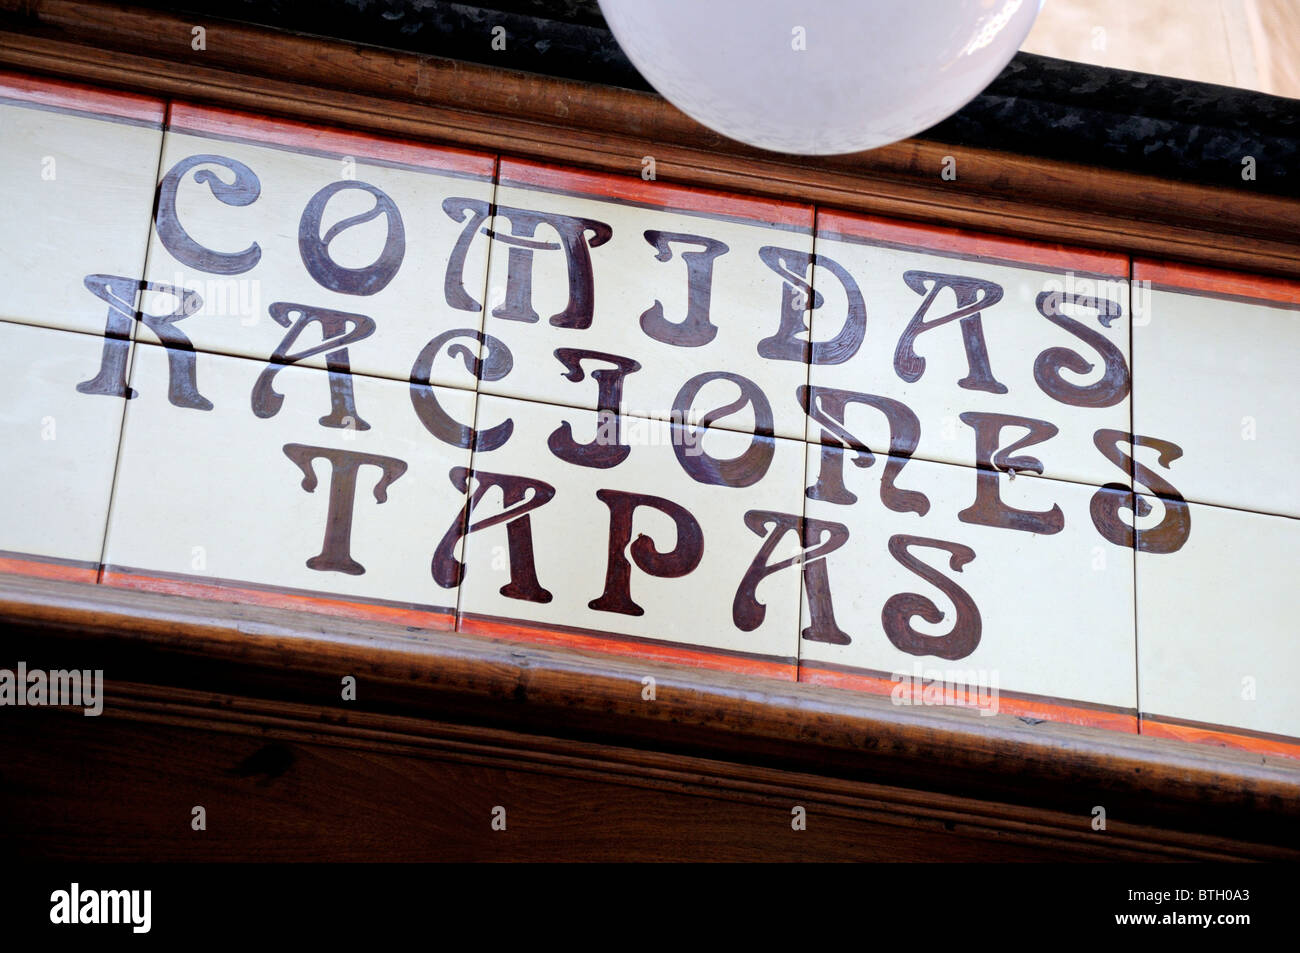 Madrid, Spain. Tiled sign above restaurant door - 'Comidas, Raciones, Tapas' Stock Photo